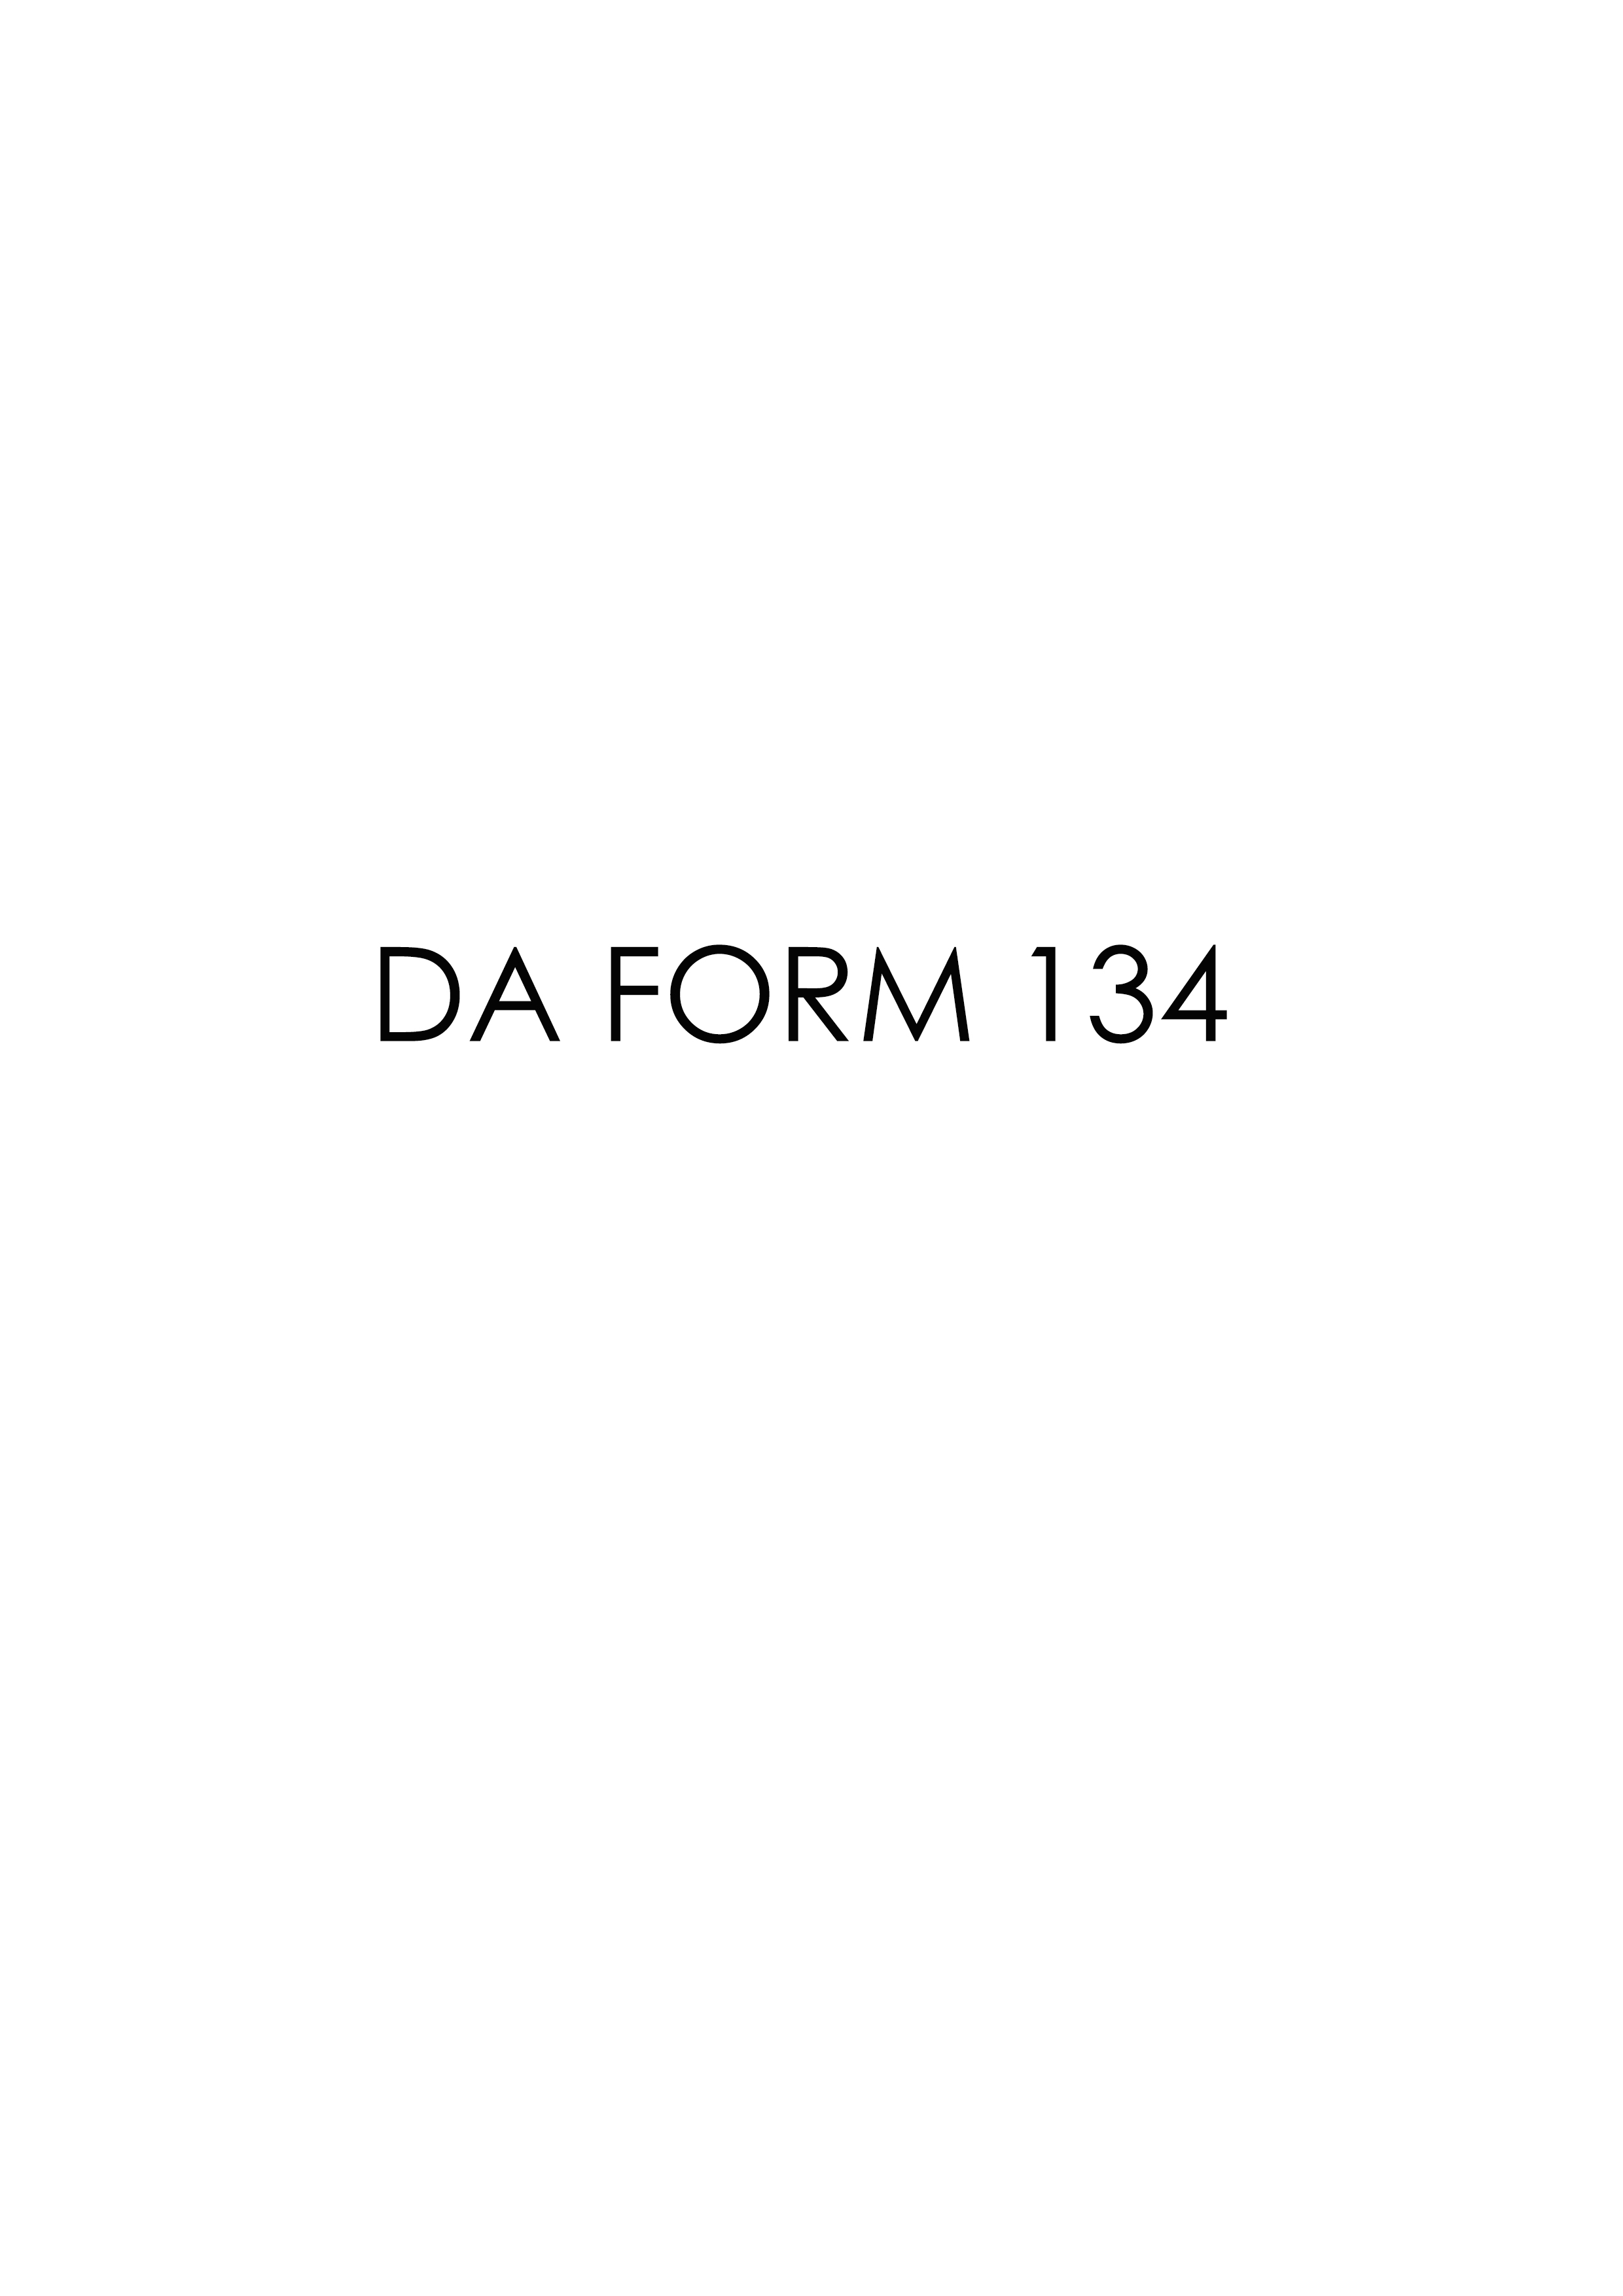 da Form 134 fillable